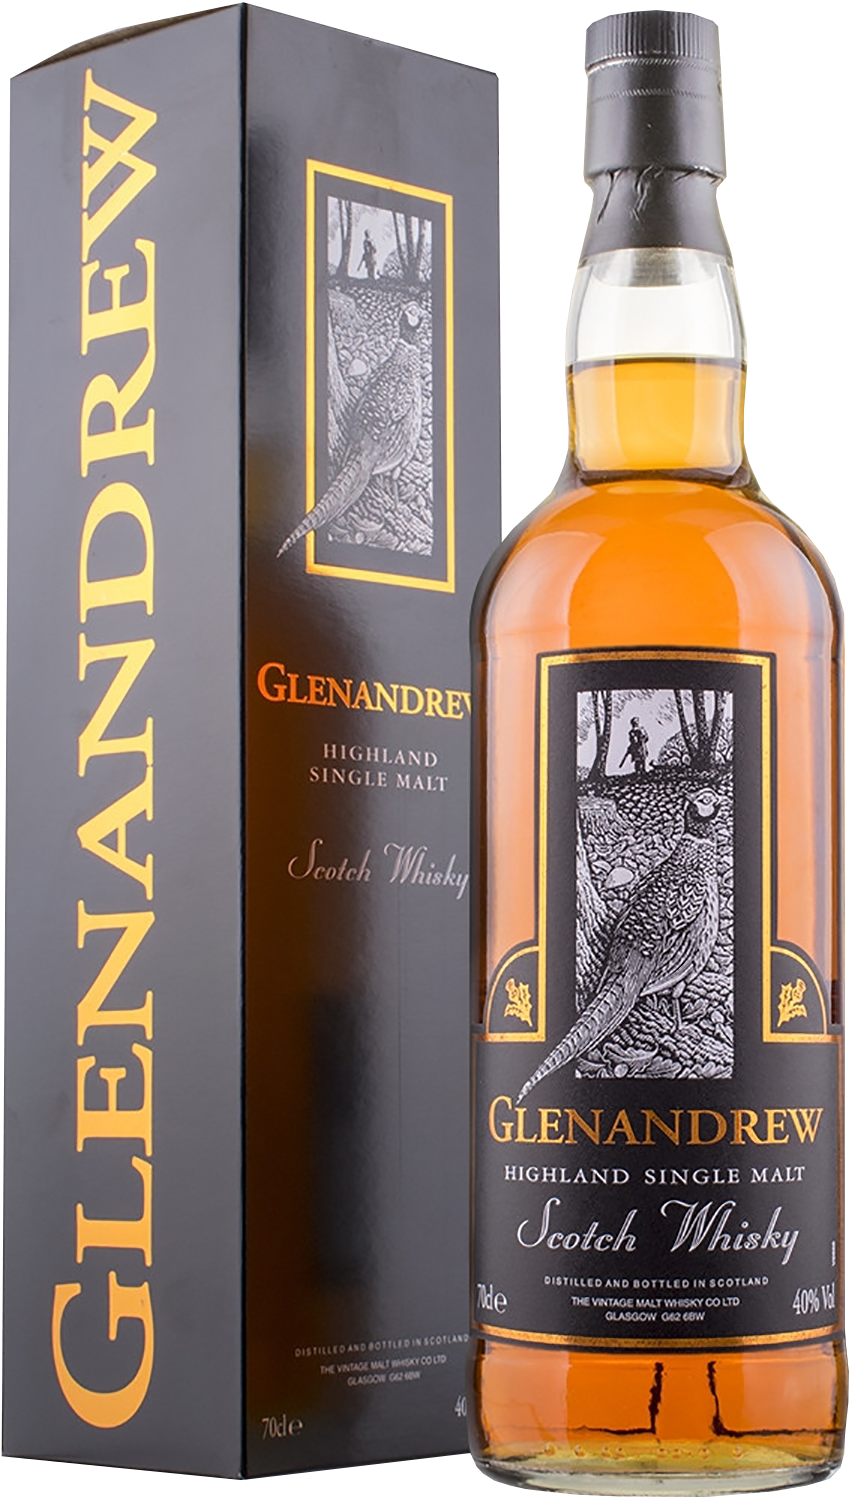 Glenandrew Highland Single Malt Scotch Whisky (gift box) glenmorangie original highland single malt scotch whisky 10 y o gift box